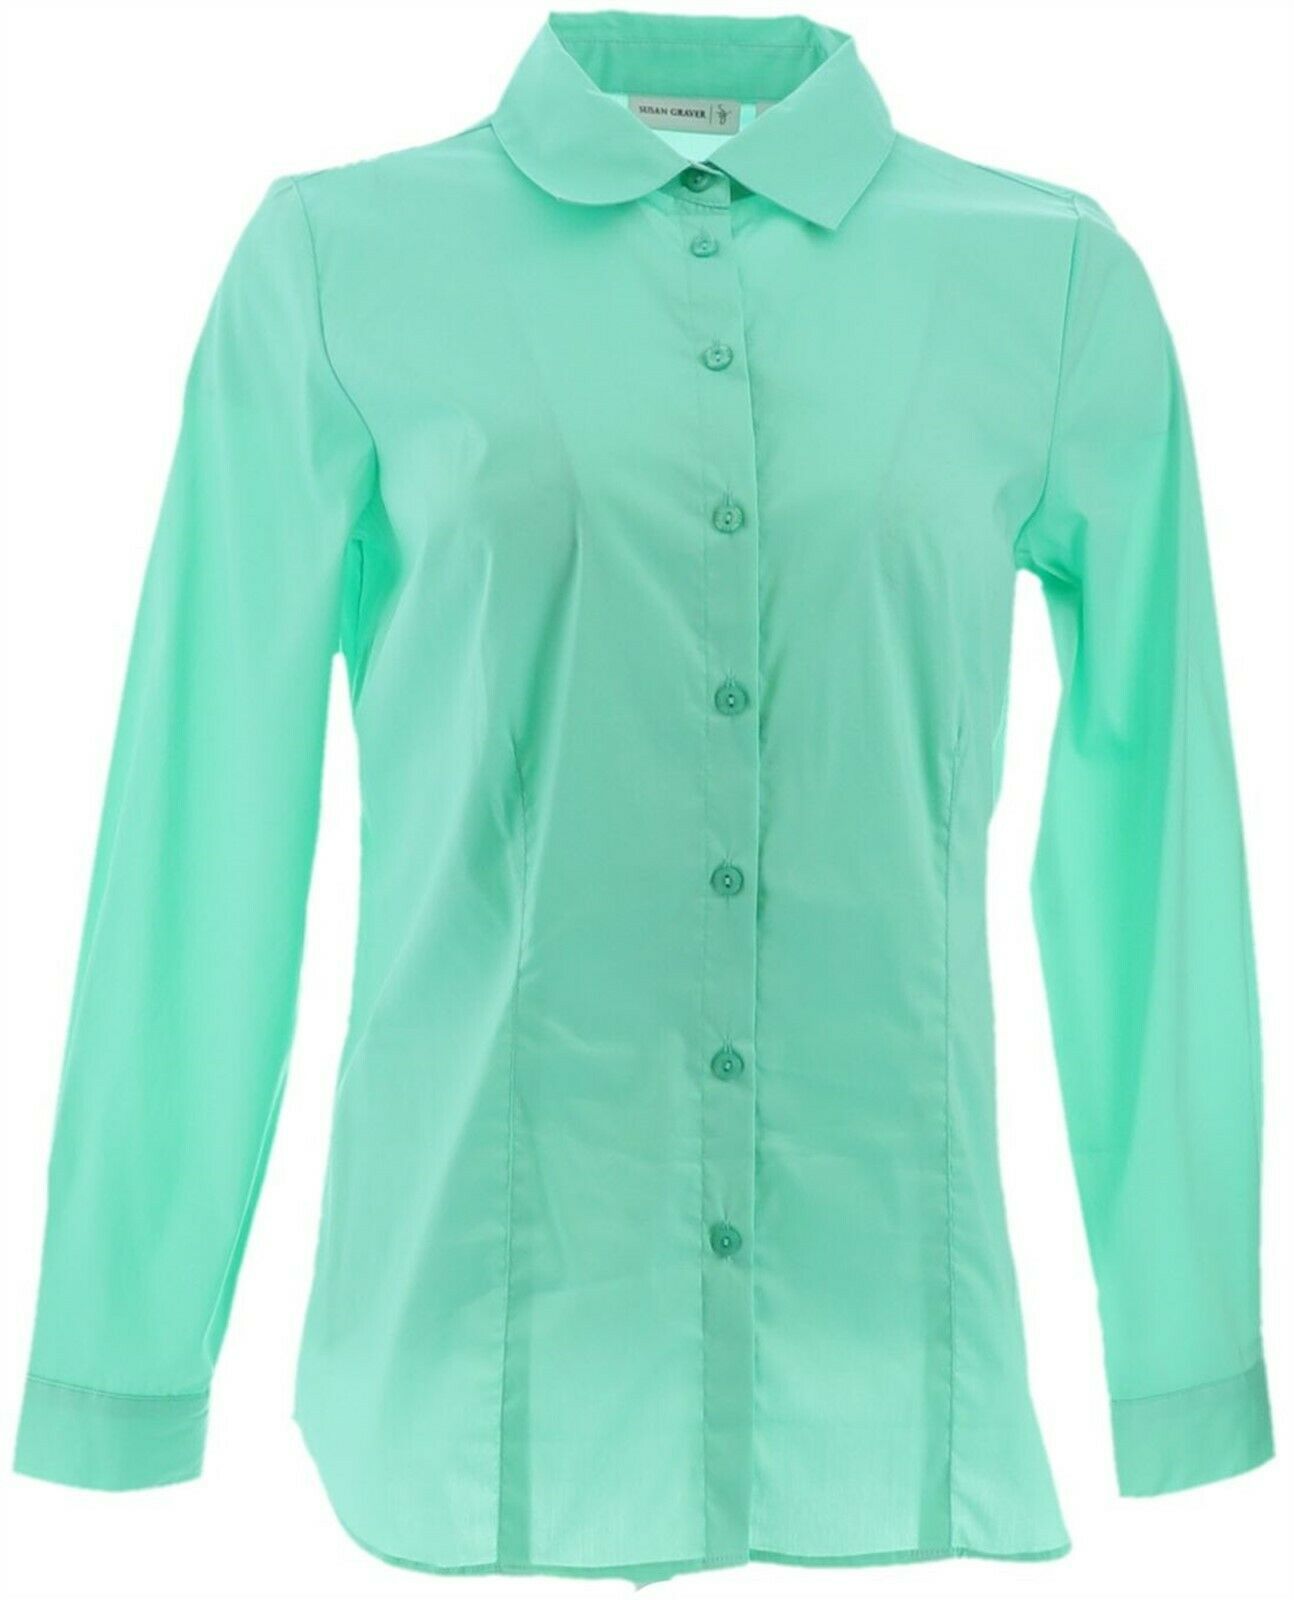 Susan Graver Stretch Woven Long Slv Button Front Shirt Cool Mint 4 NEW A261936